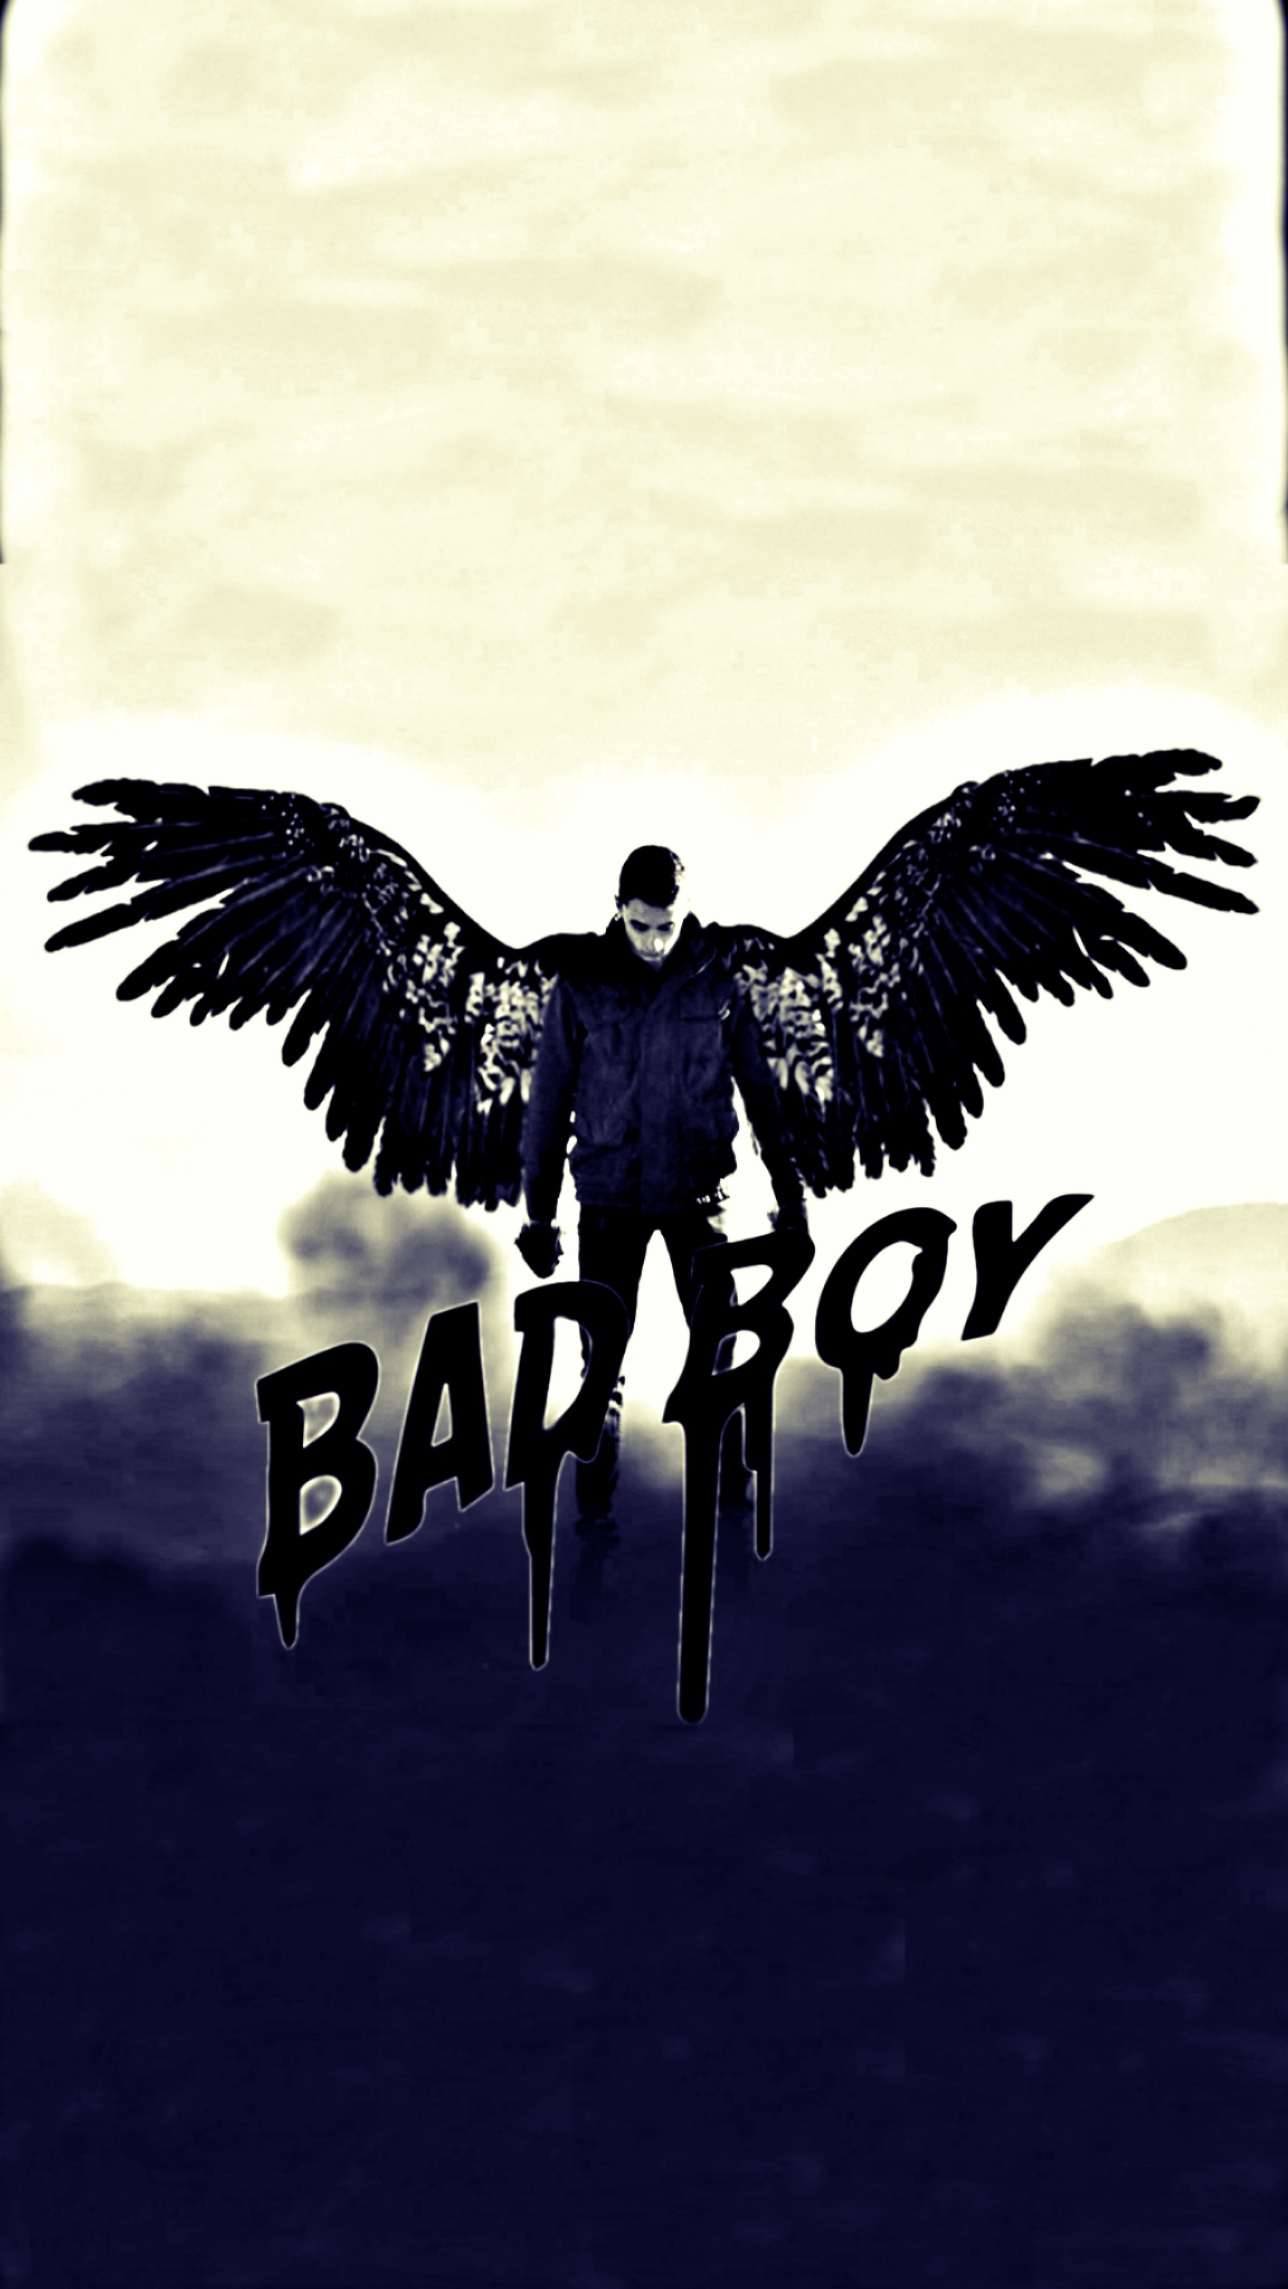 I Am Bad Boy - Devil Wings